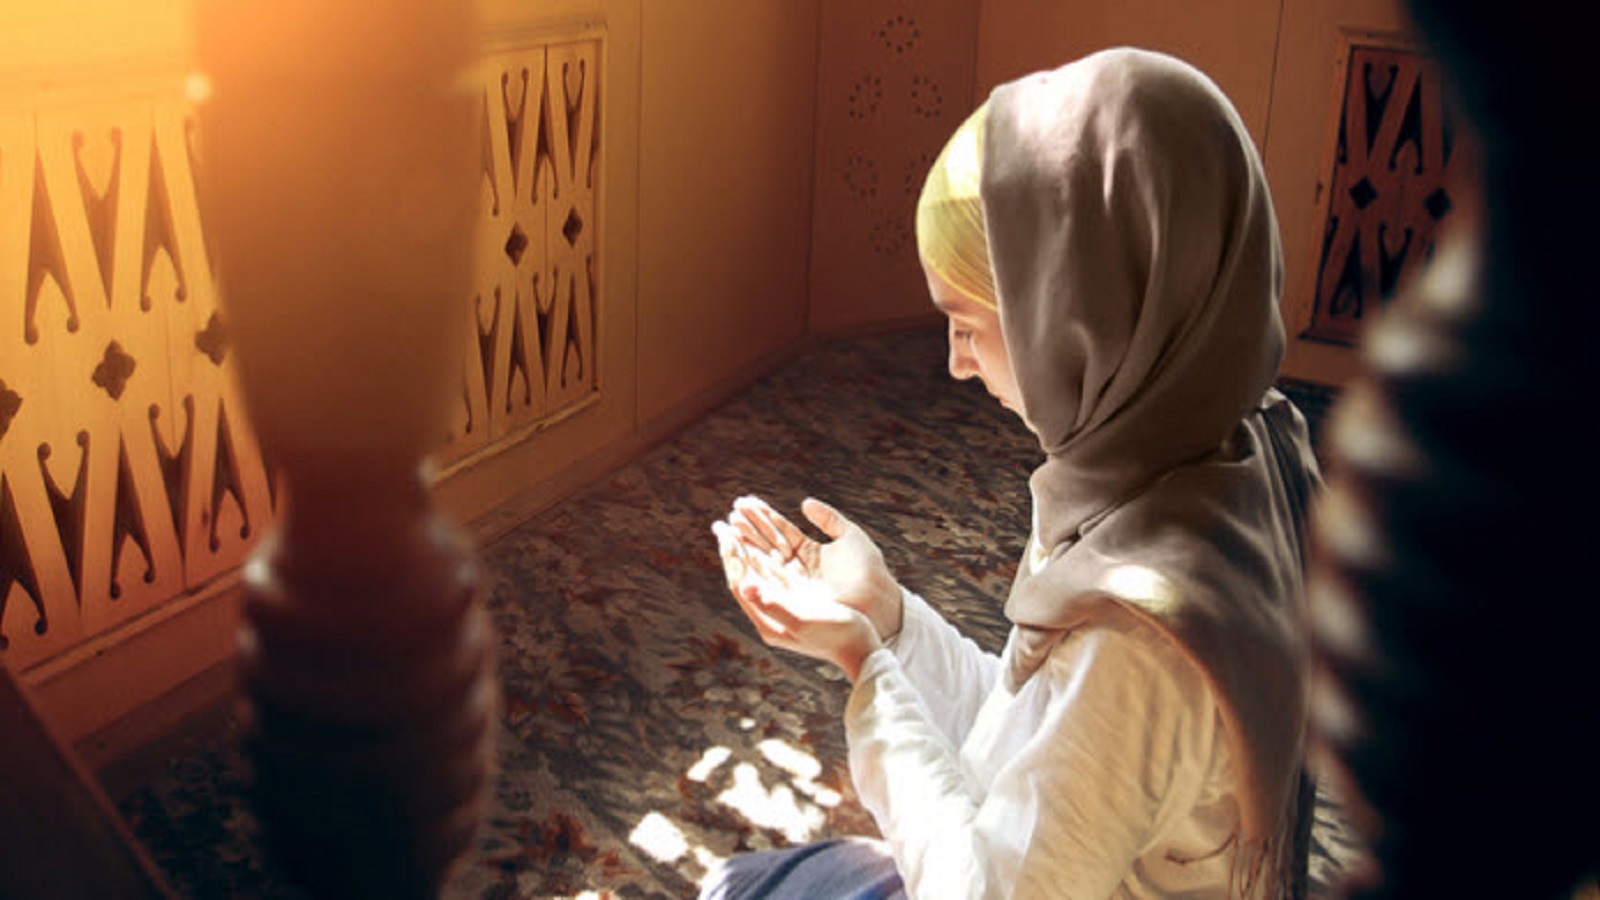 Молитва мусульманских женщин. Мусульманка молится. Мусульманин молится. Мусульманские женщины молятся.